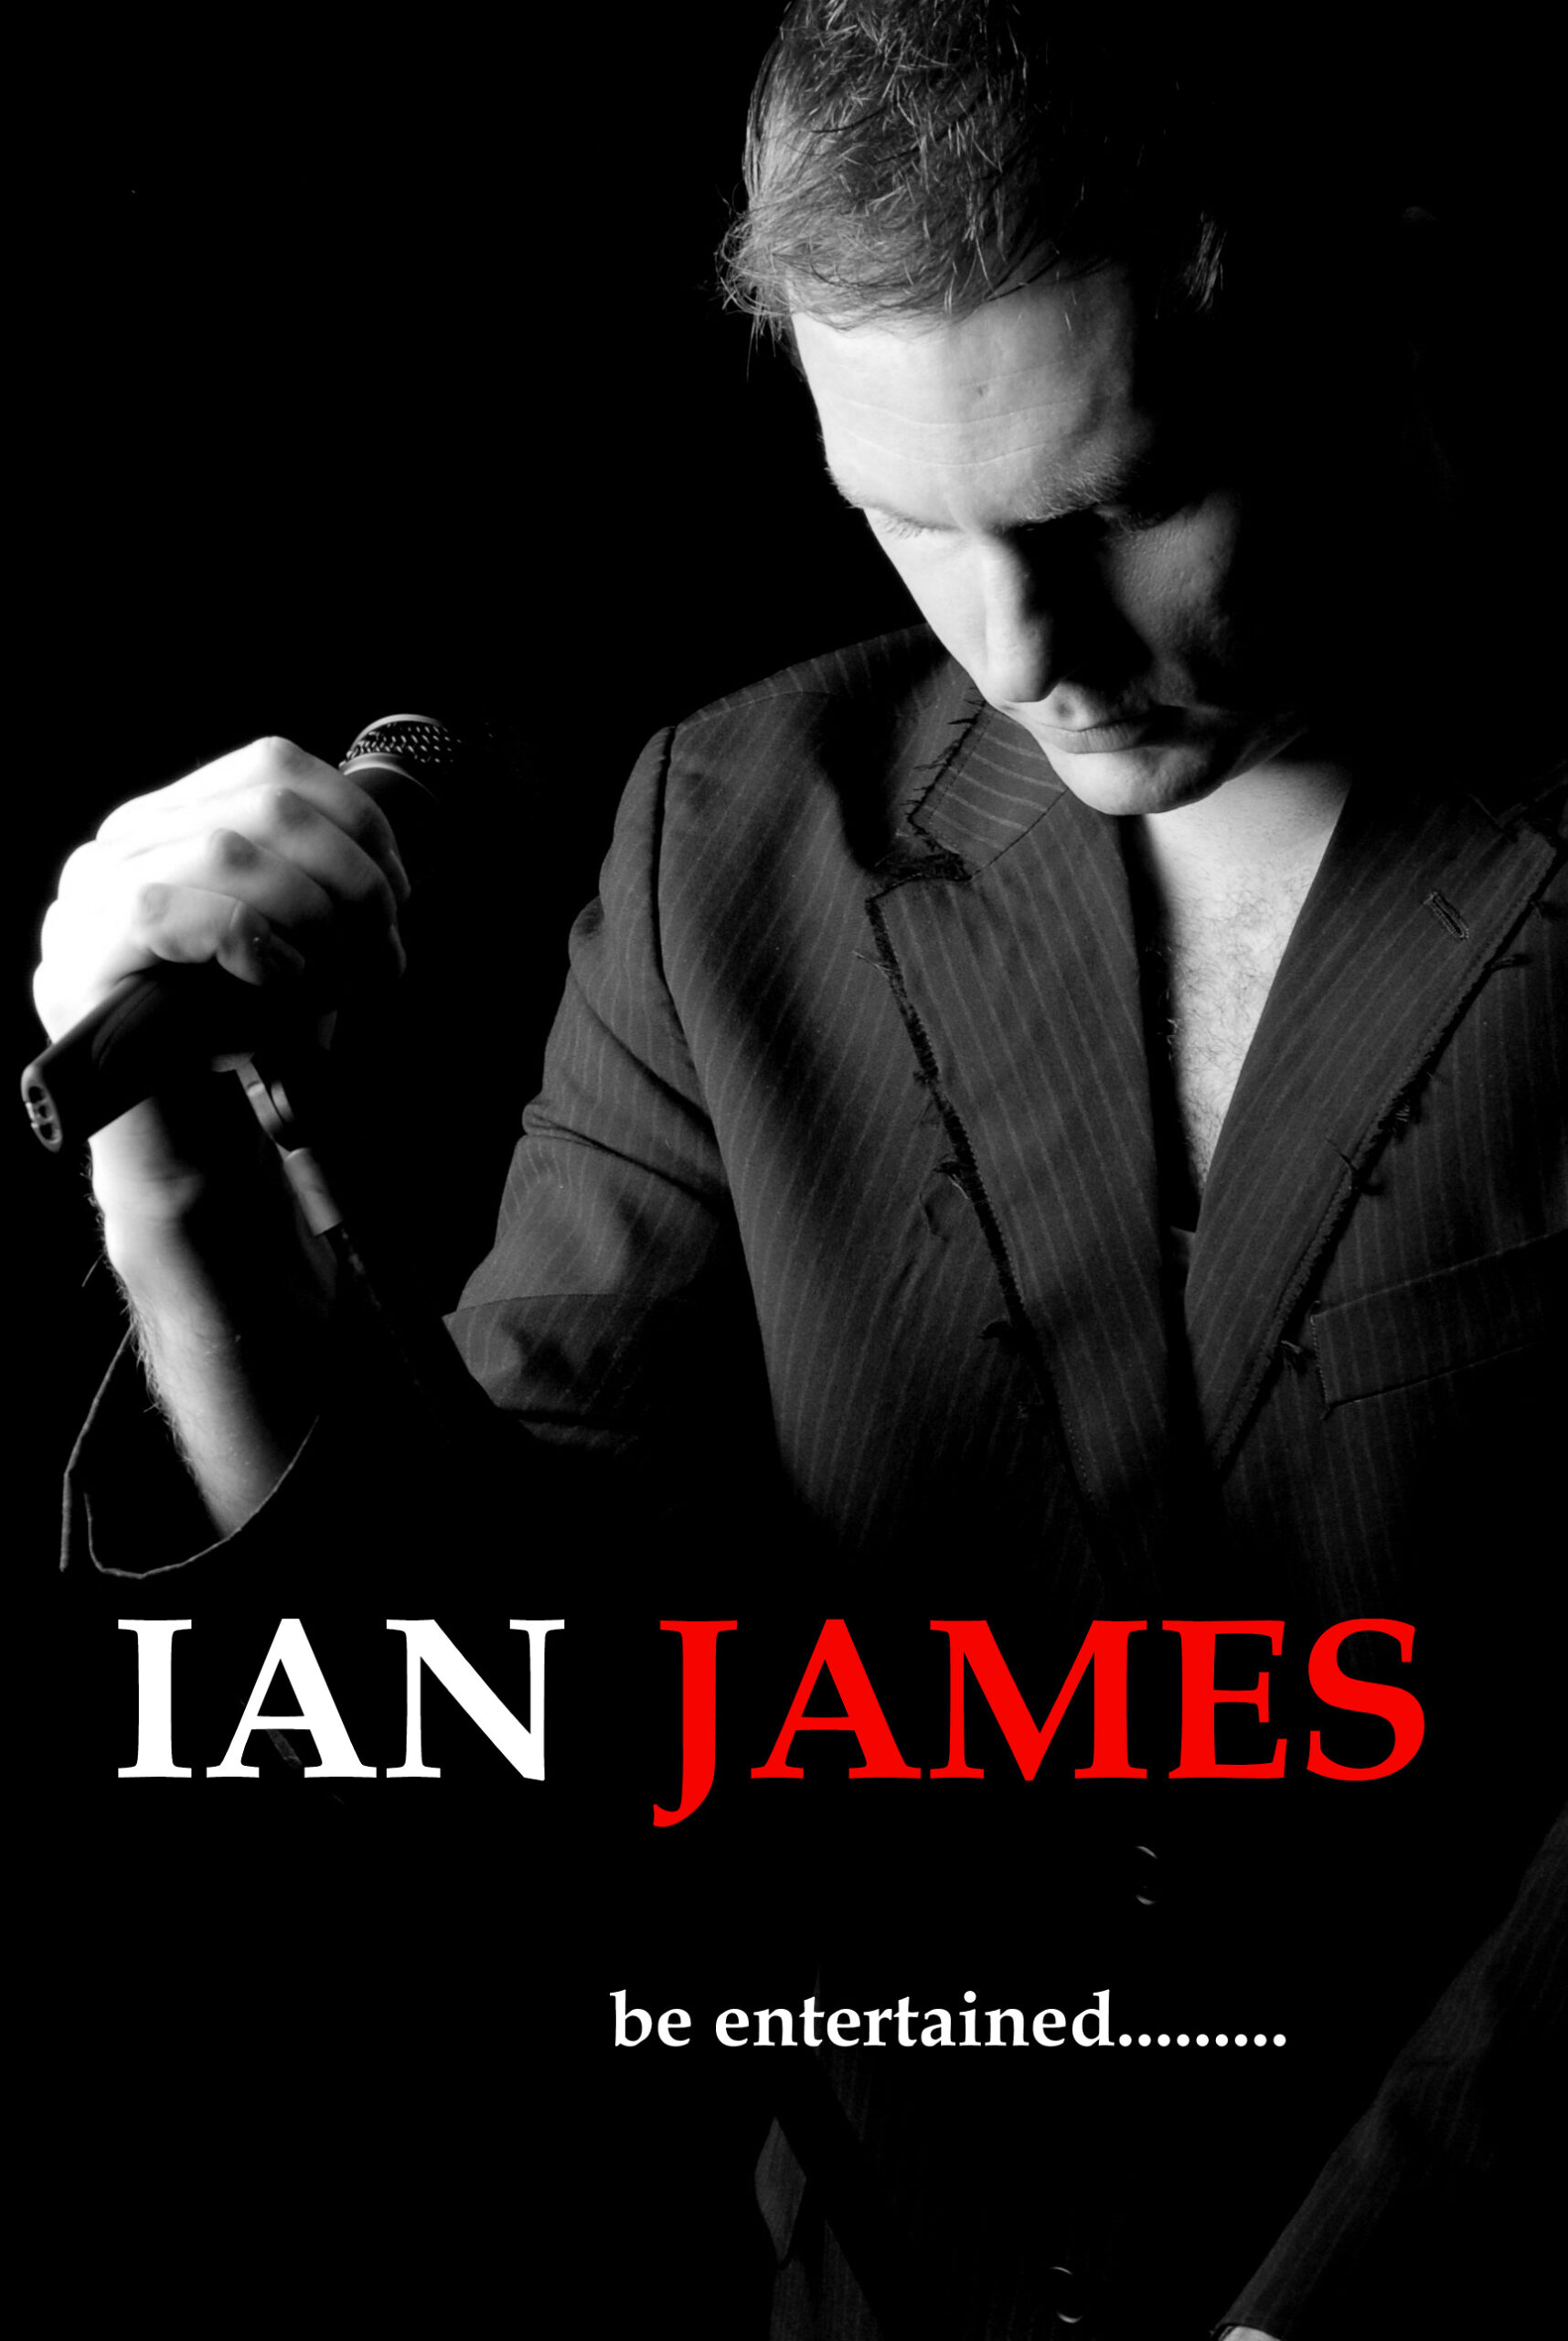 Ian James Solo Singer